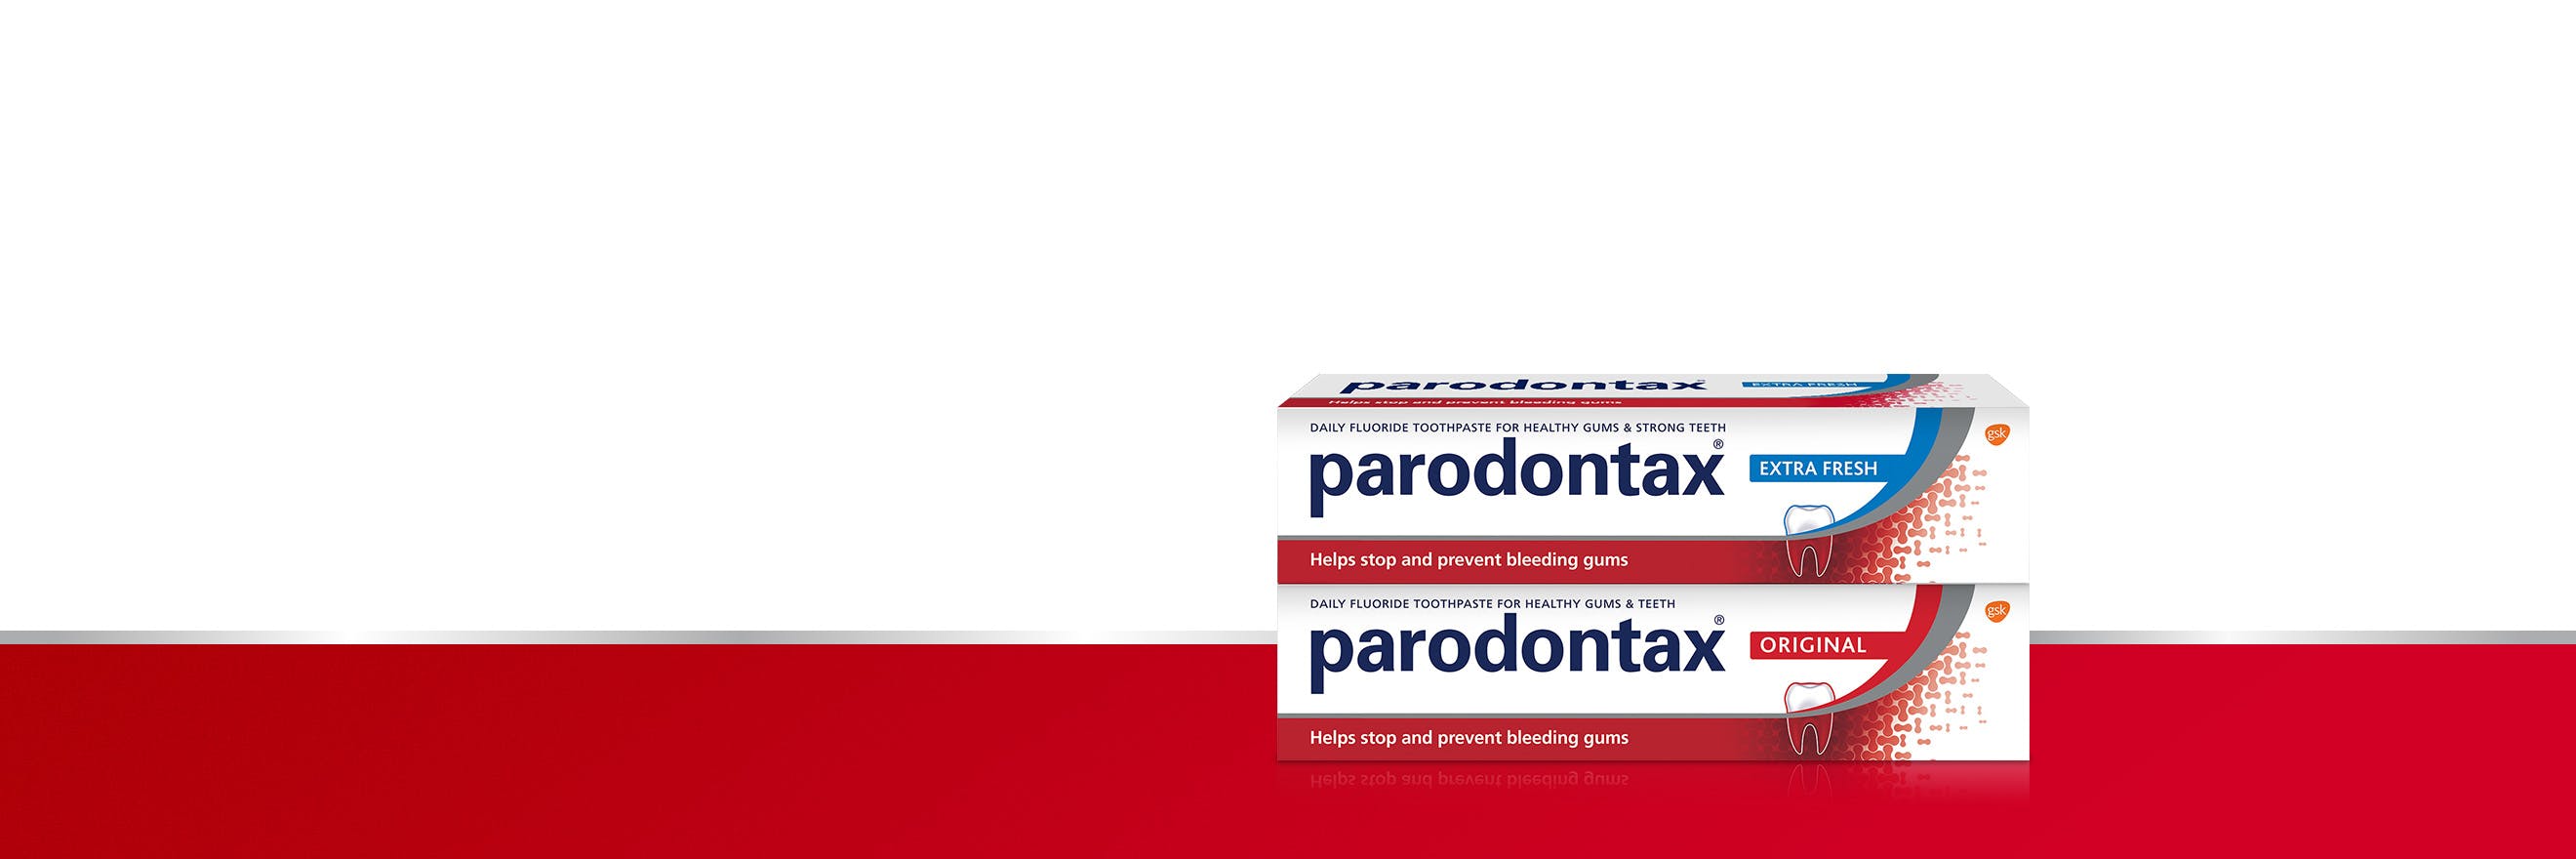 parodontax Daily Original toothpaste and Extra Fresh toothpaste